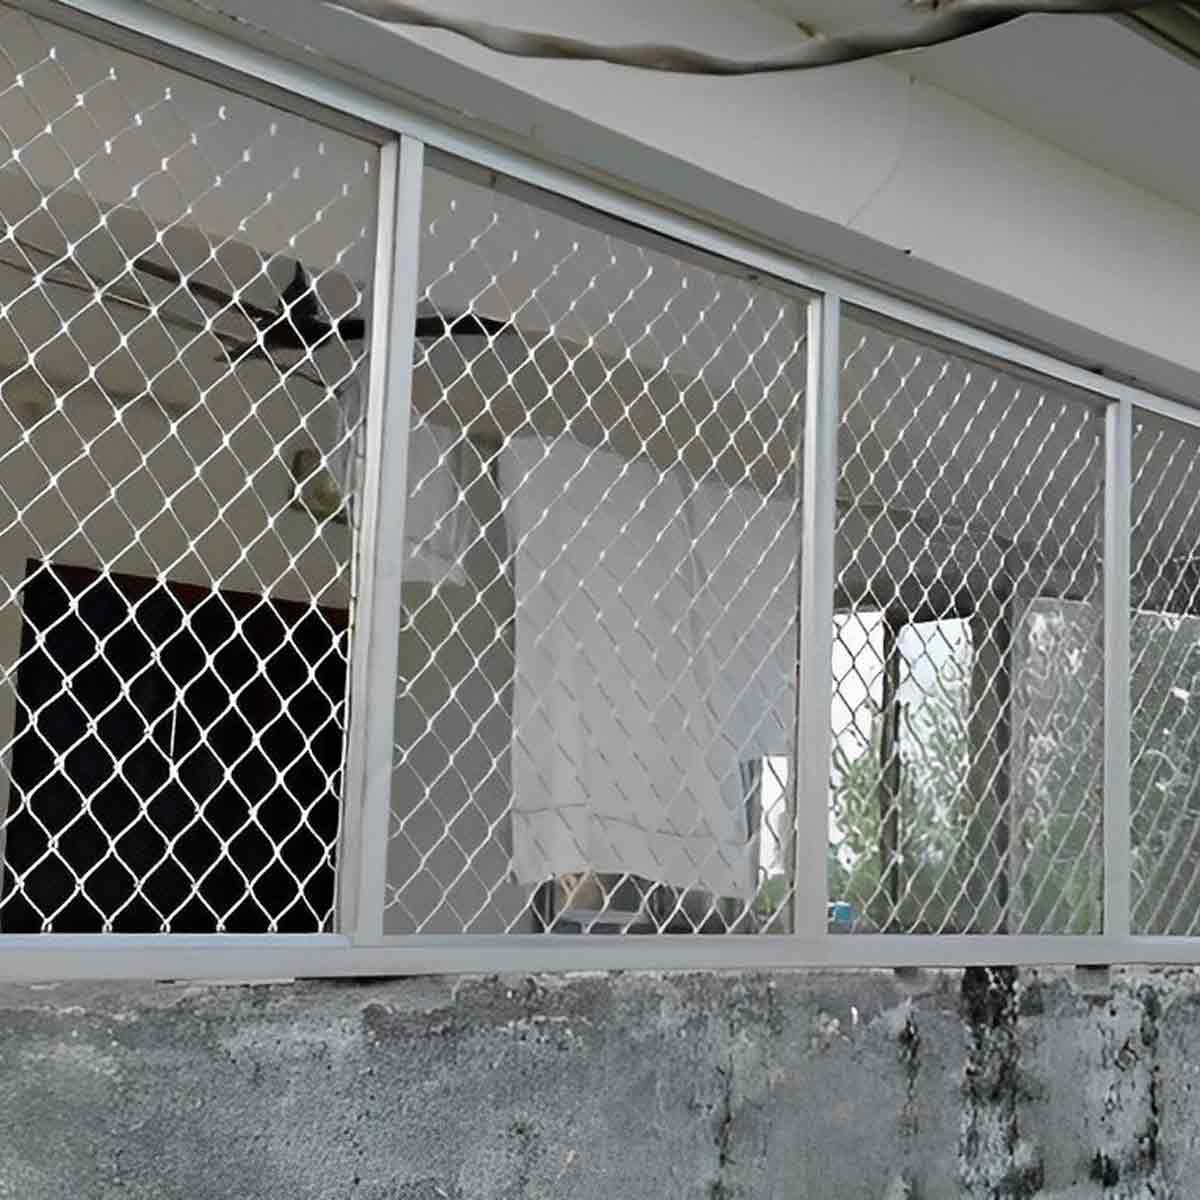 Aluminium Balcony Grills For Residential Manufacturers, Suppliers in Gautam Buddha Nagar